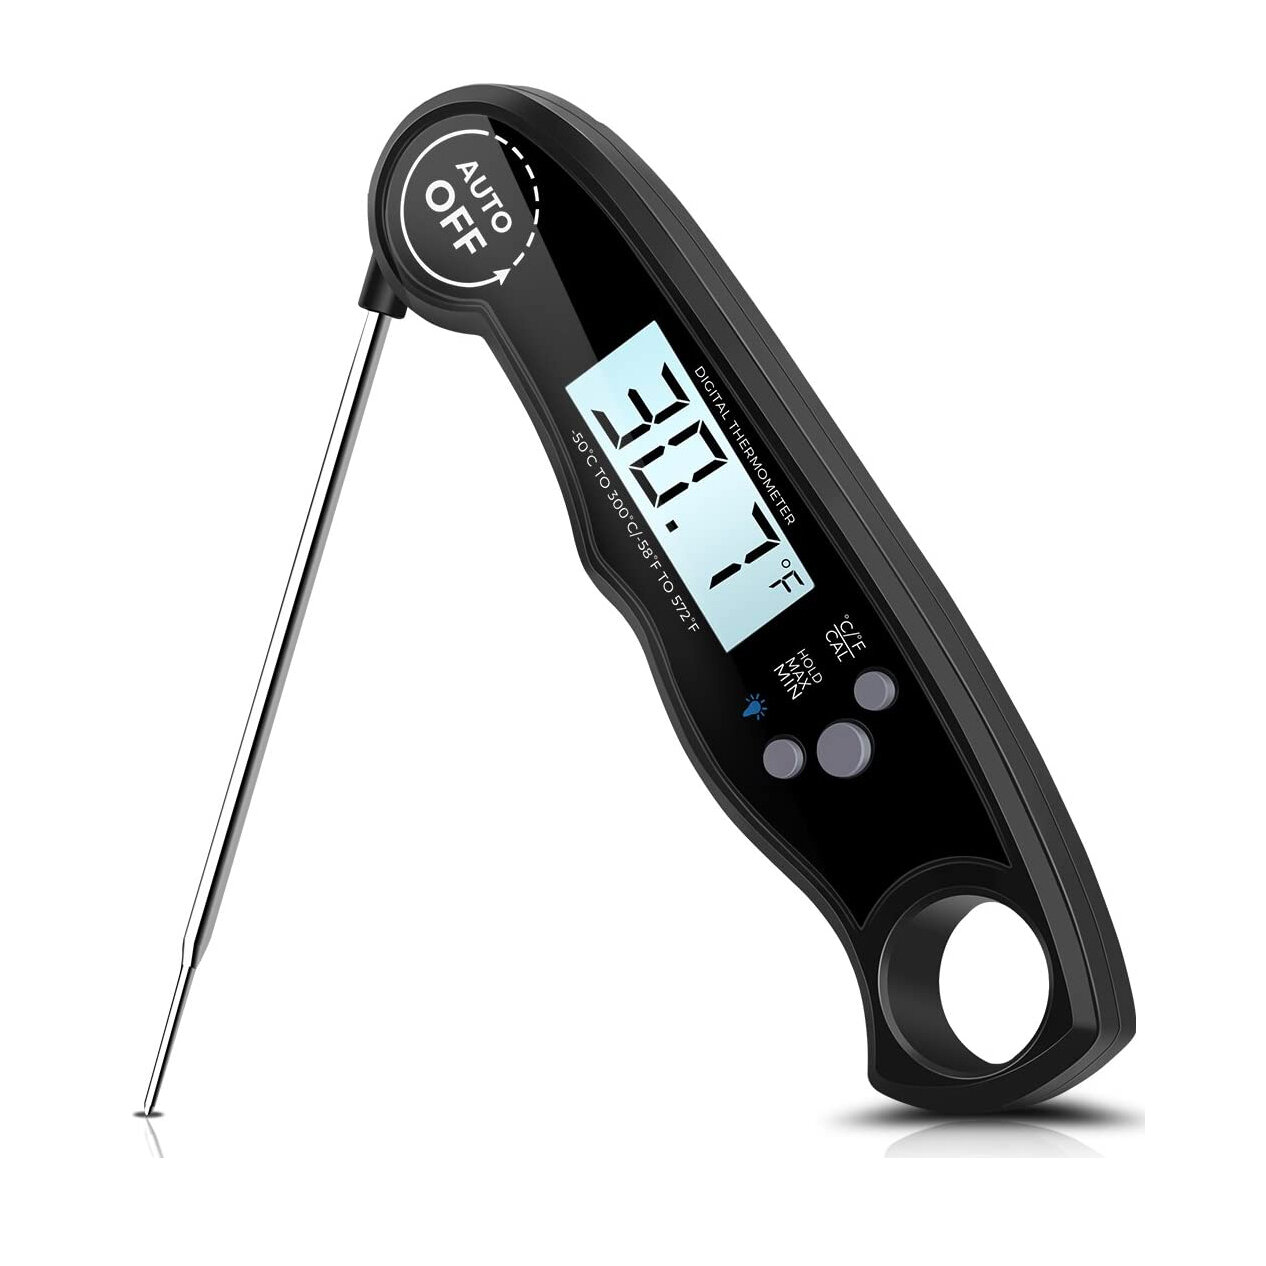 3-4s Quick Response digitale elektronische thermometer met waterdichte sonde Voedselthermometer voor BBQ Grill Kitchen Cooking